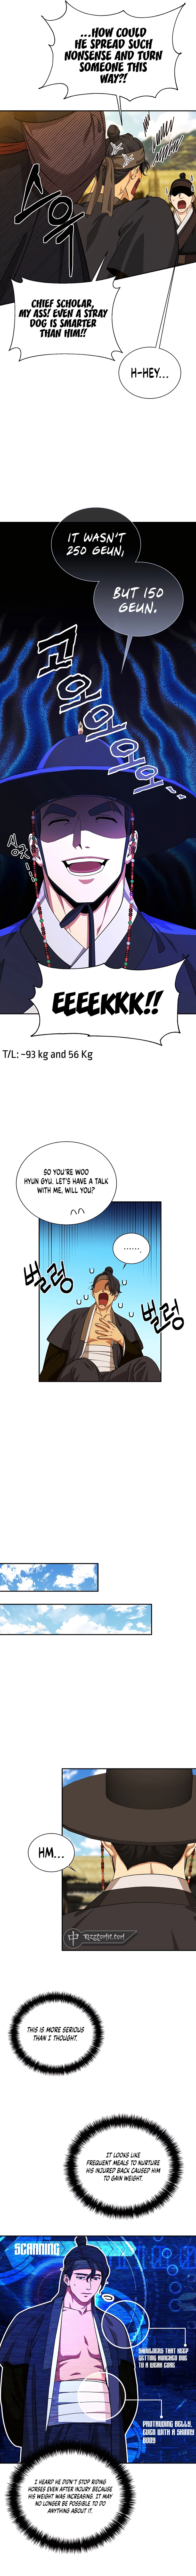 Muscle Joseon, Chapter 16 image 07